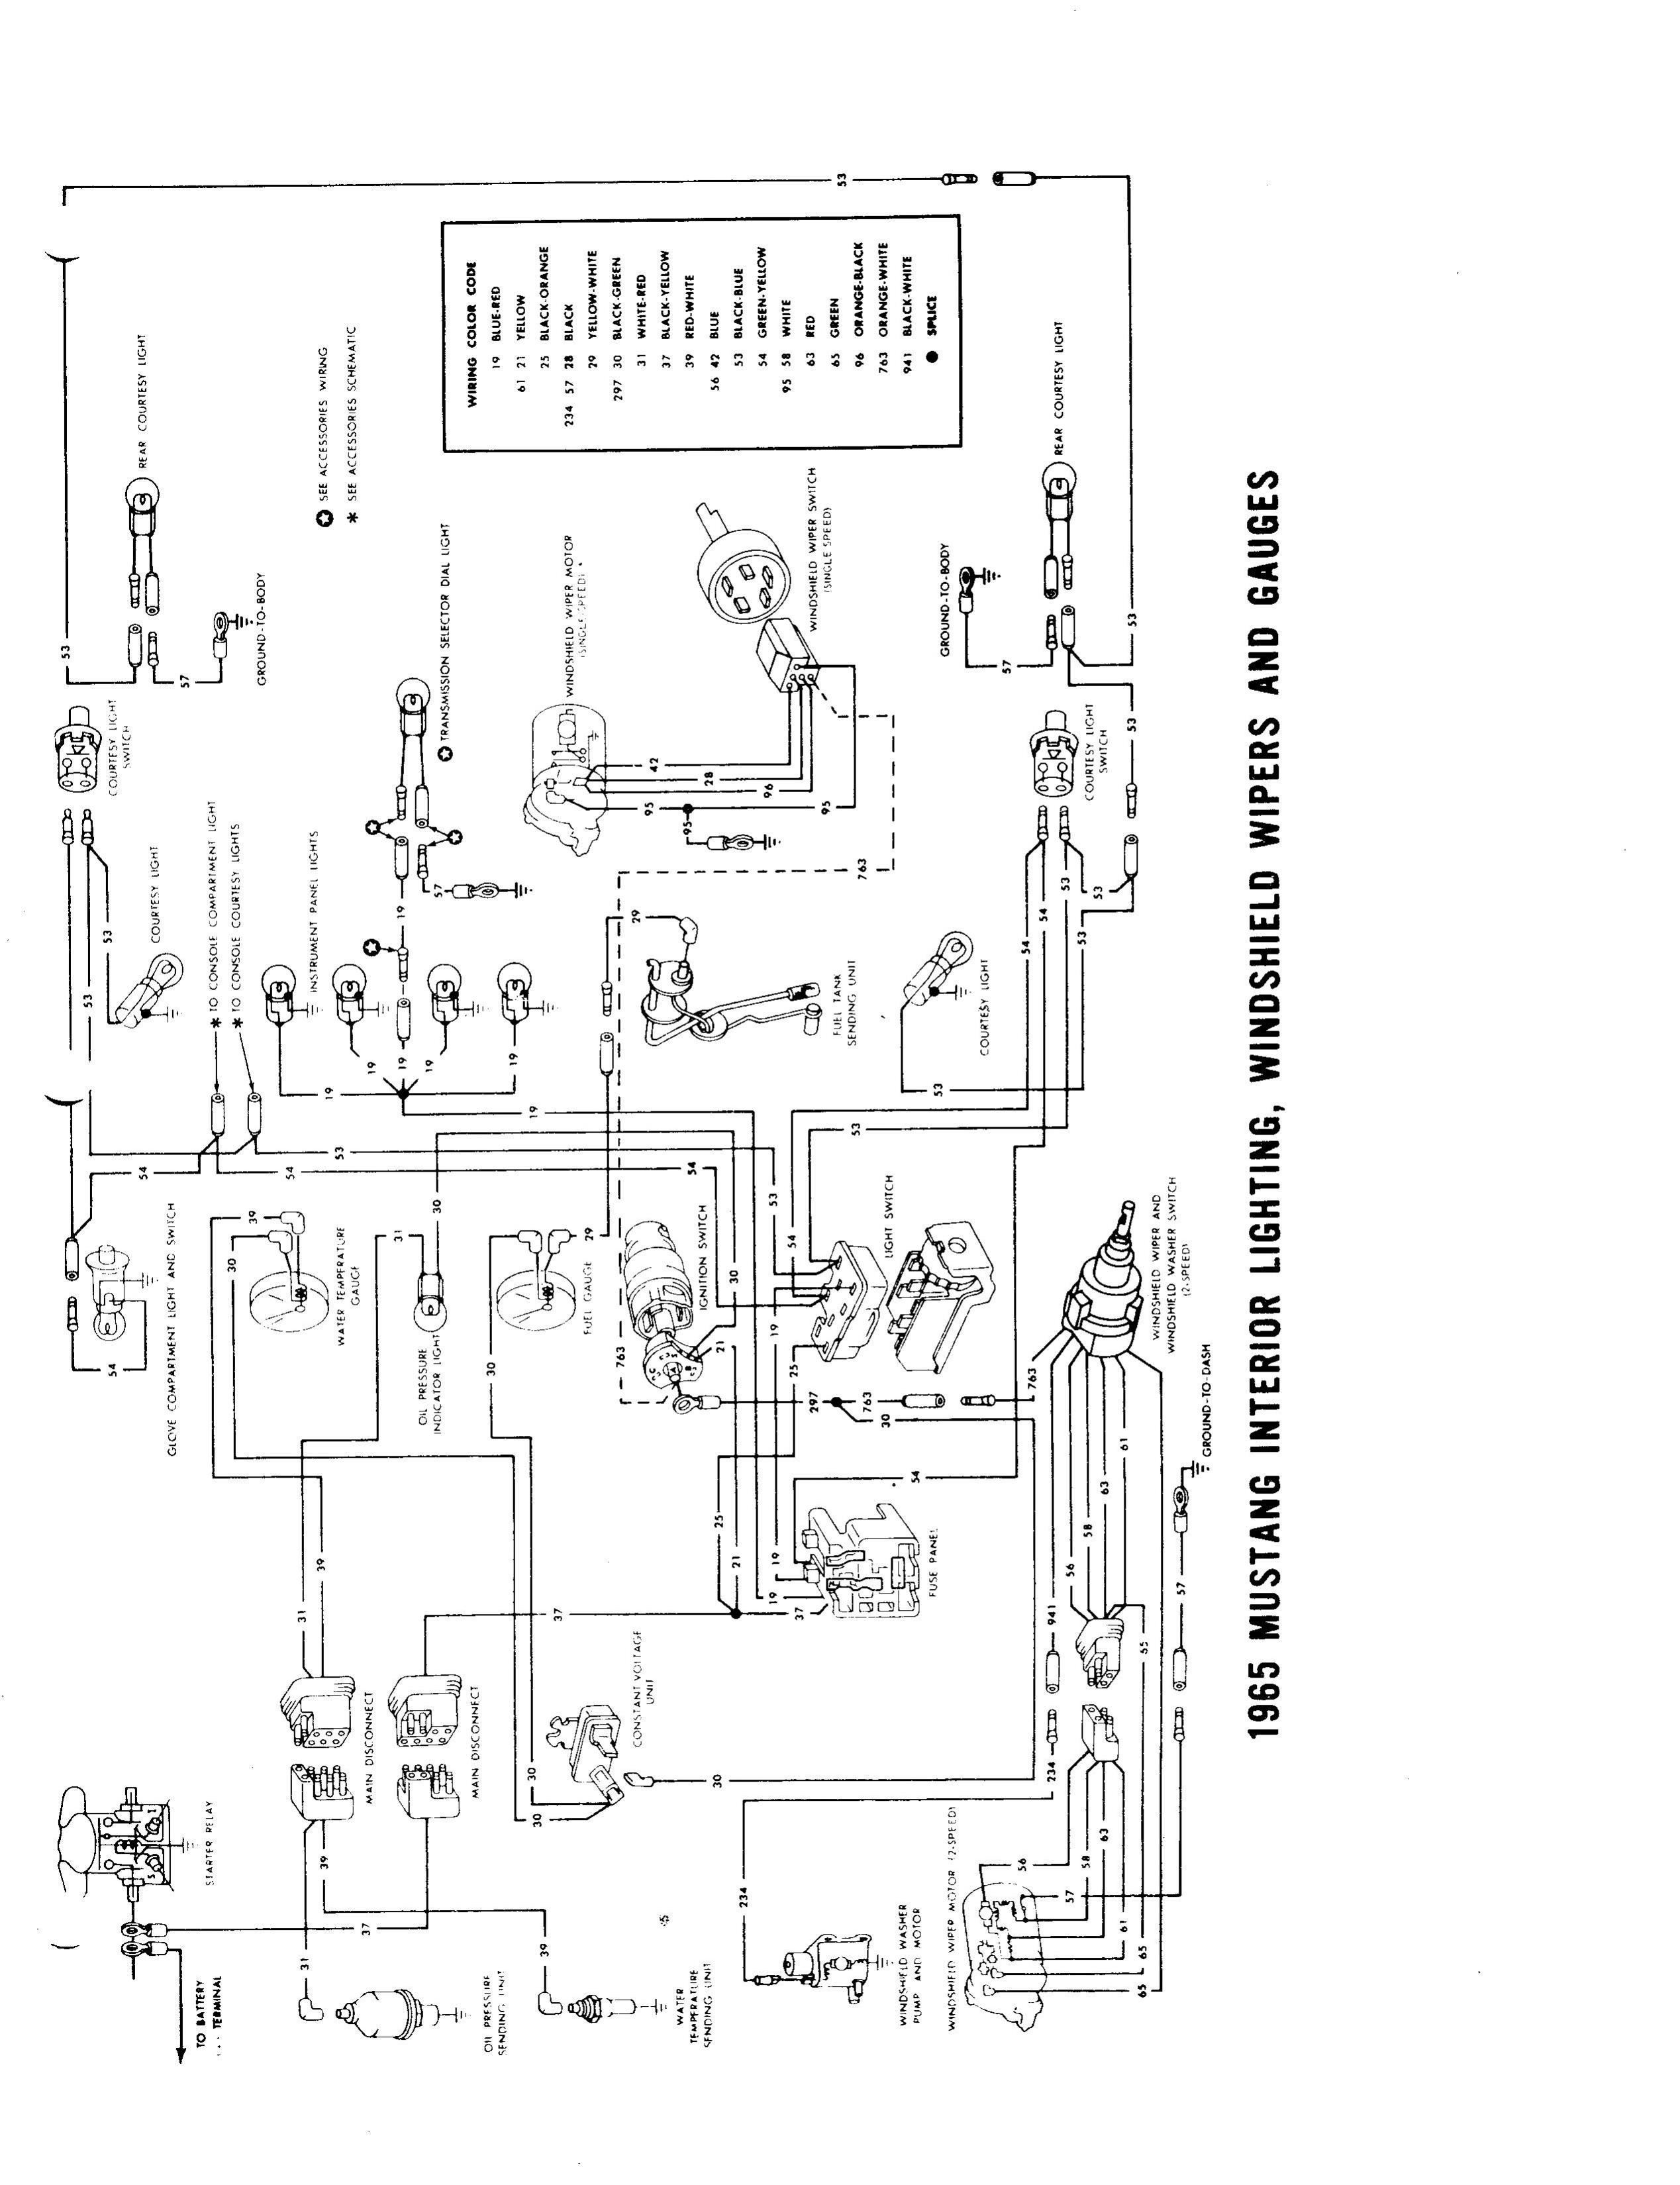 Spitronic Wiring Diagram 1uzfe Wiring Diagram Full Hd Version Wiring Diagram Of Spitronic Wiring Diagram